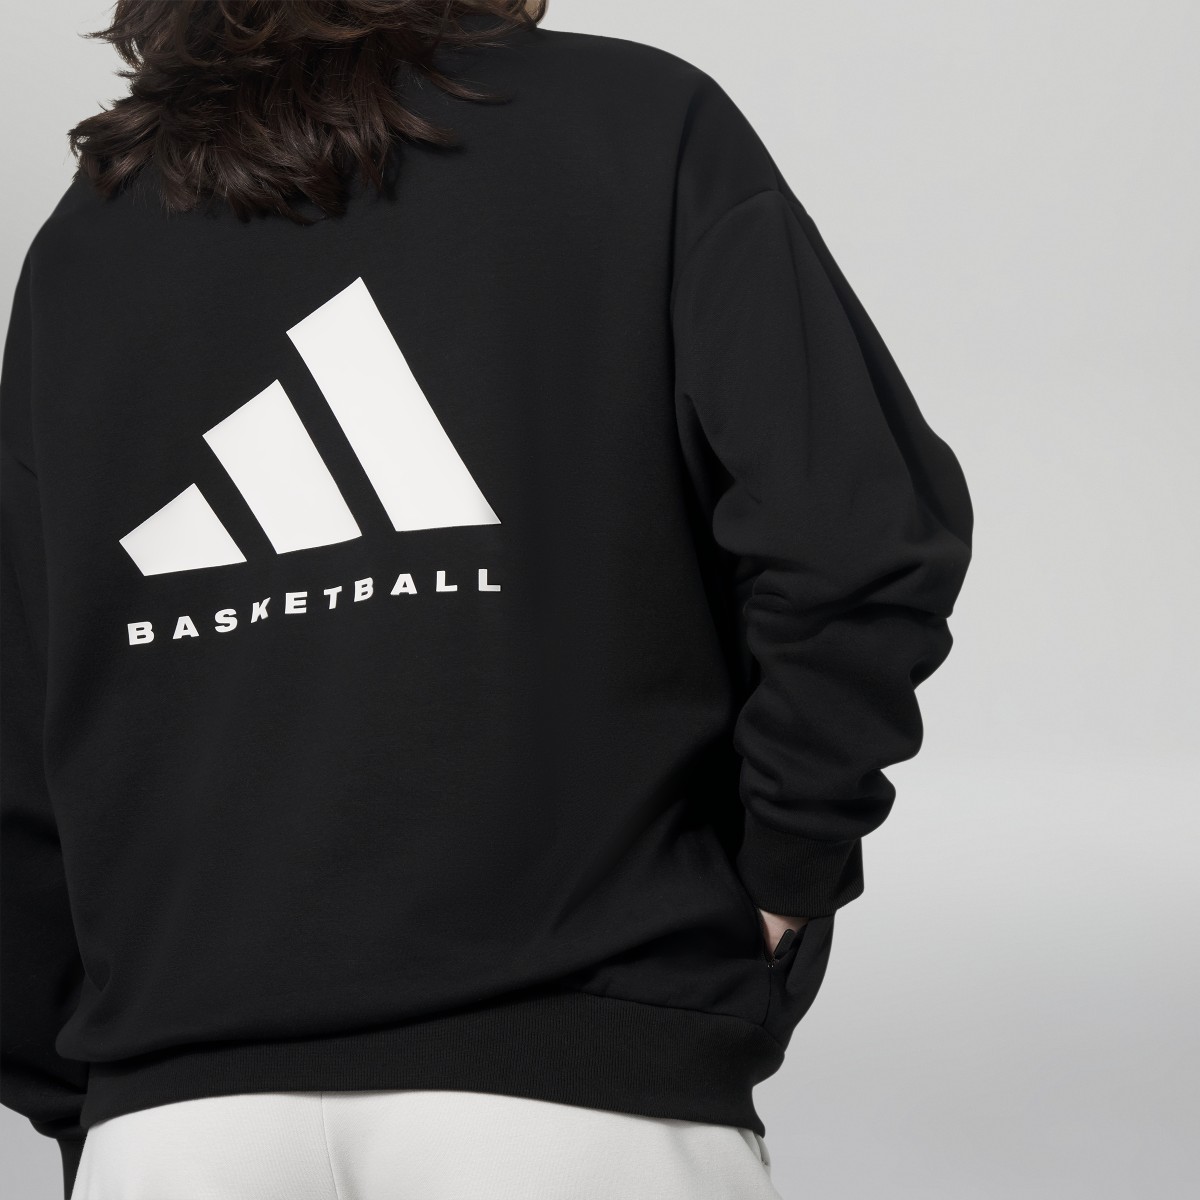 Adidas Basketball Sweatshirt. 5